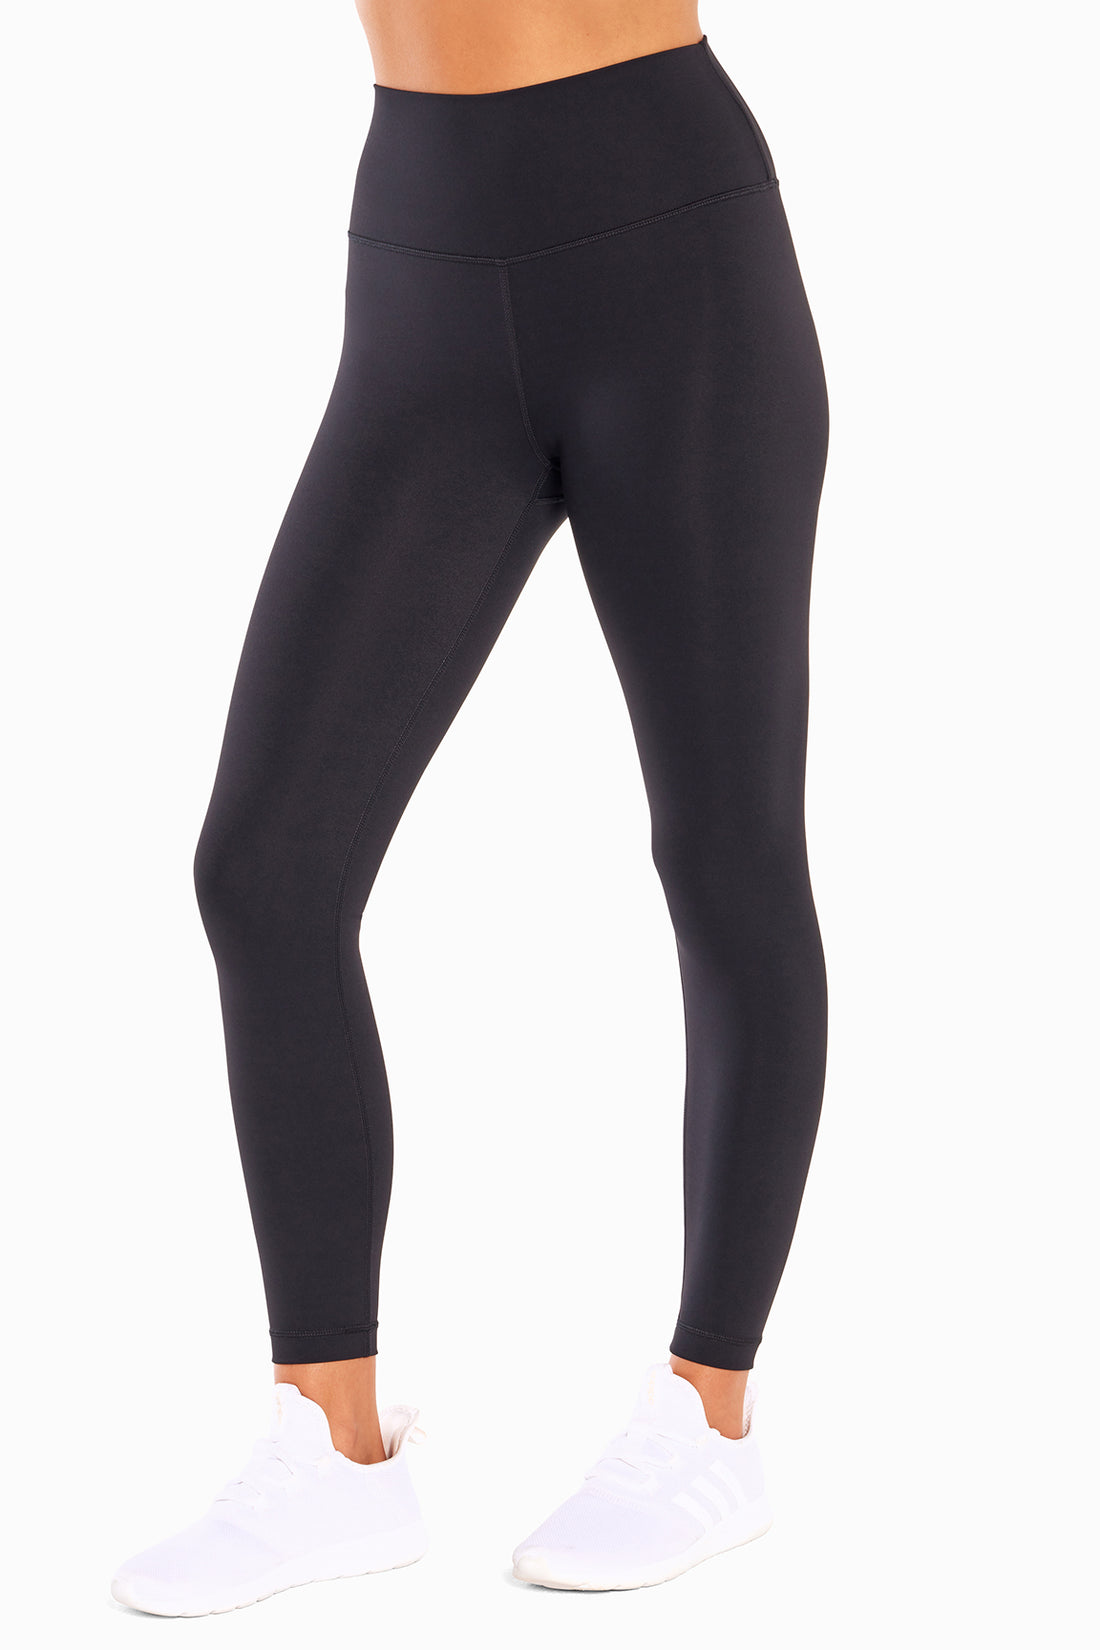 Maryia Womens High Waist Yoga Capris Cropped Pants Workout Runing Athletic  Jogger Sports Bandage Skinny Leggings Black Large